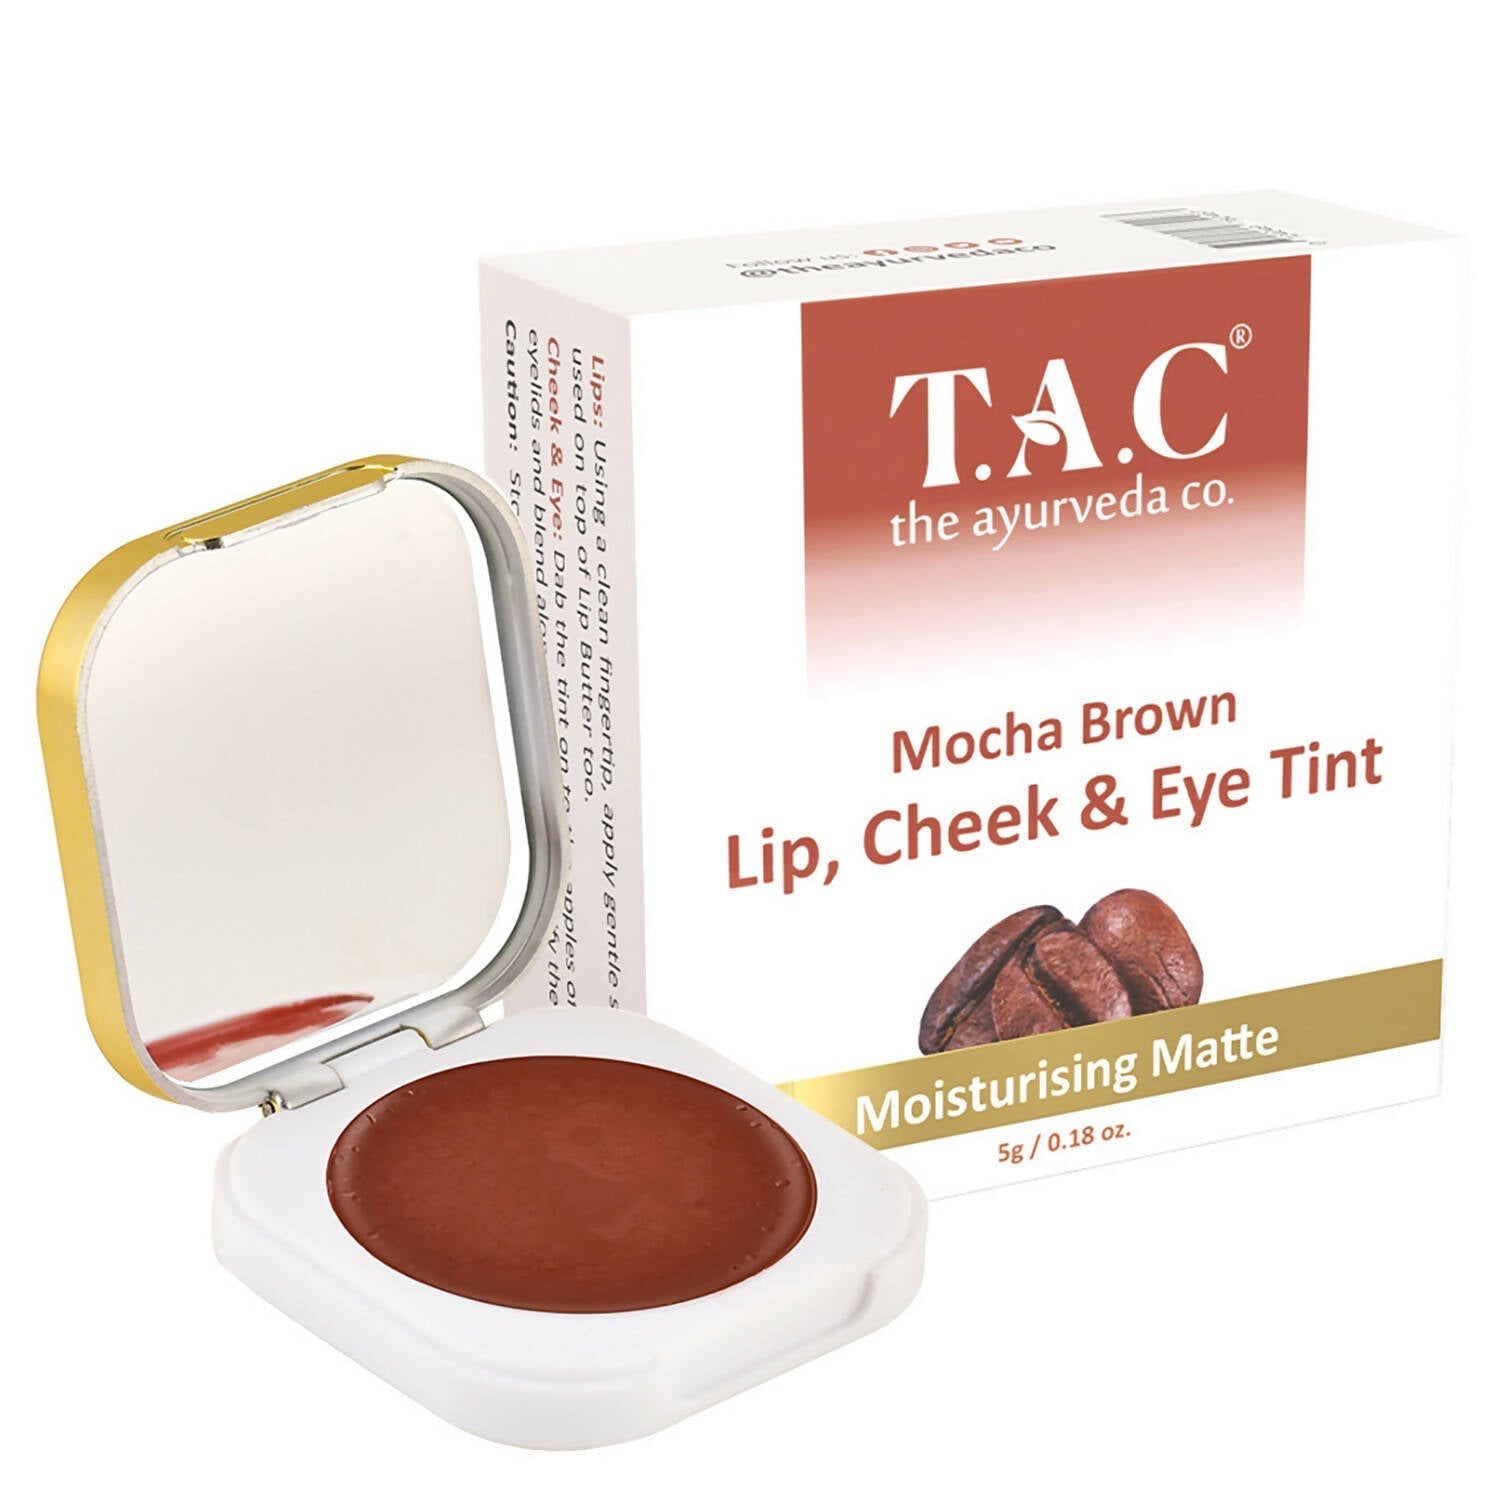 TAC - The Ayurveda Co. Brown Mocha Lip, Cheek & Eye Tint - BUDNE